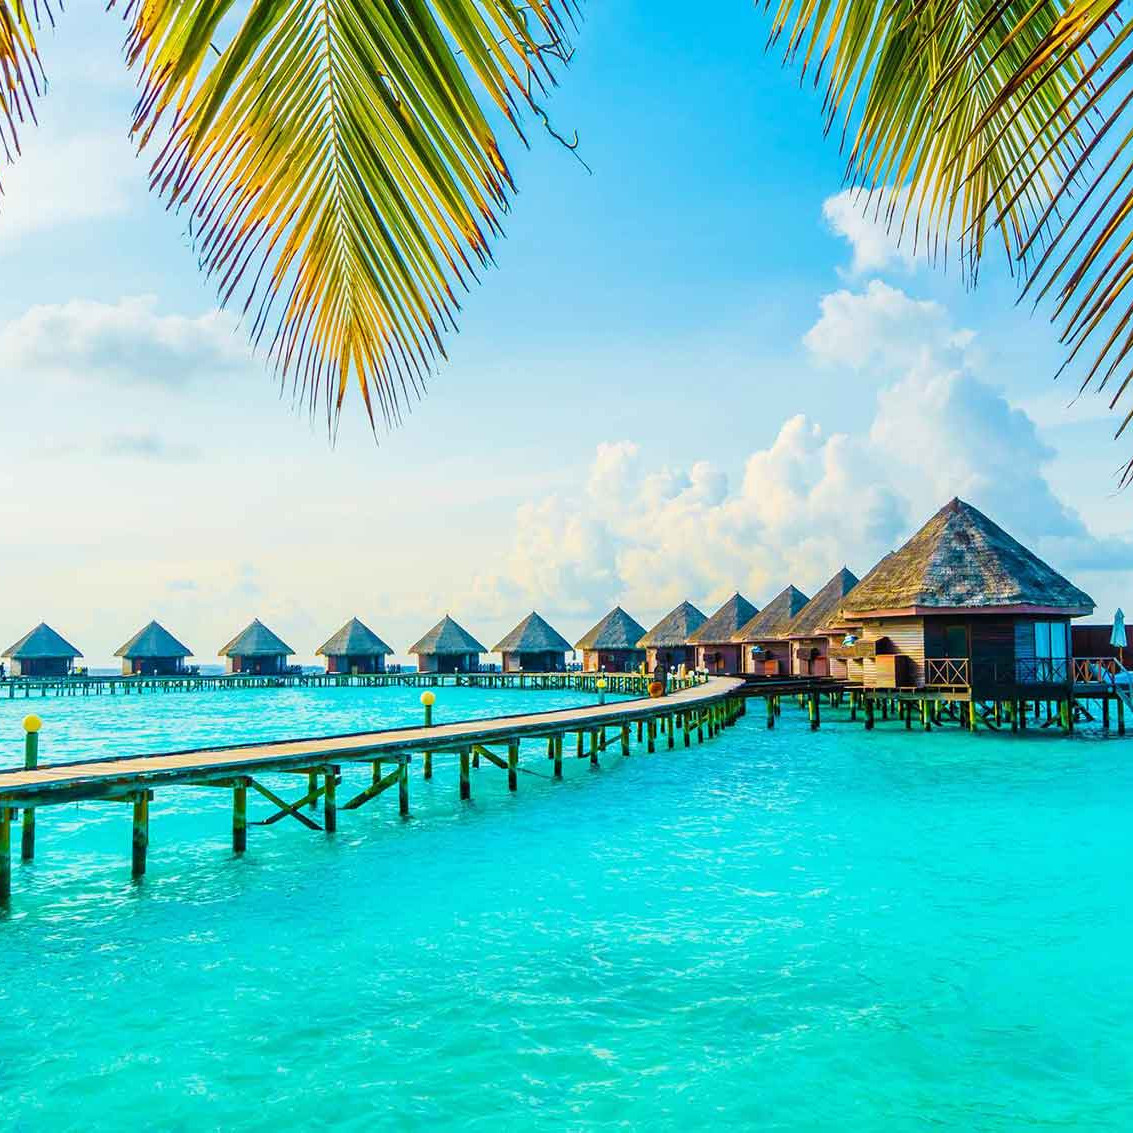 The maldives travel